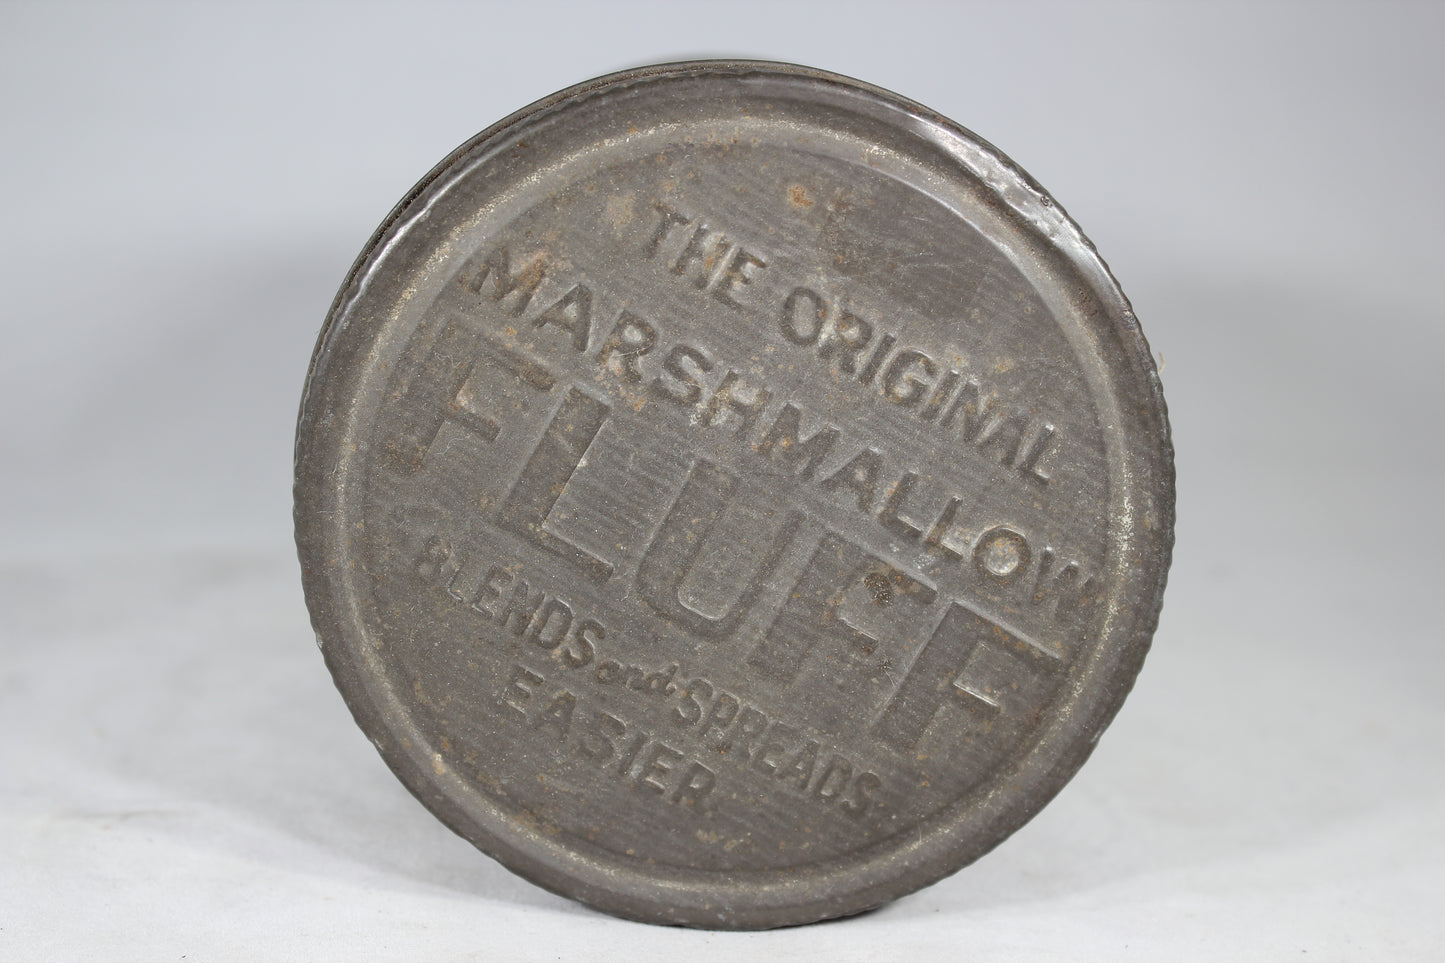 The Original Marshmallow Fluff Vintage Can - A Somerville Original